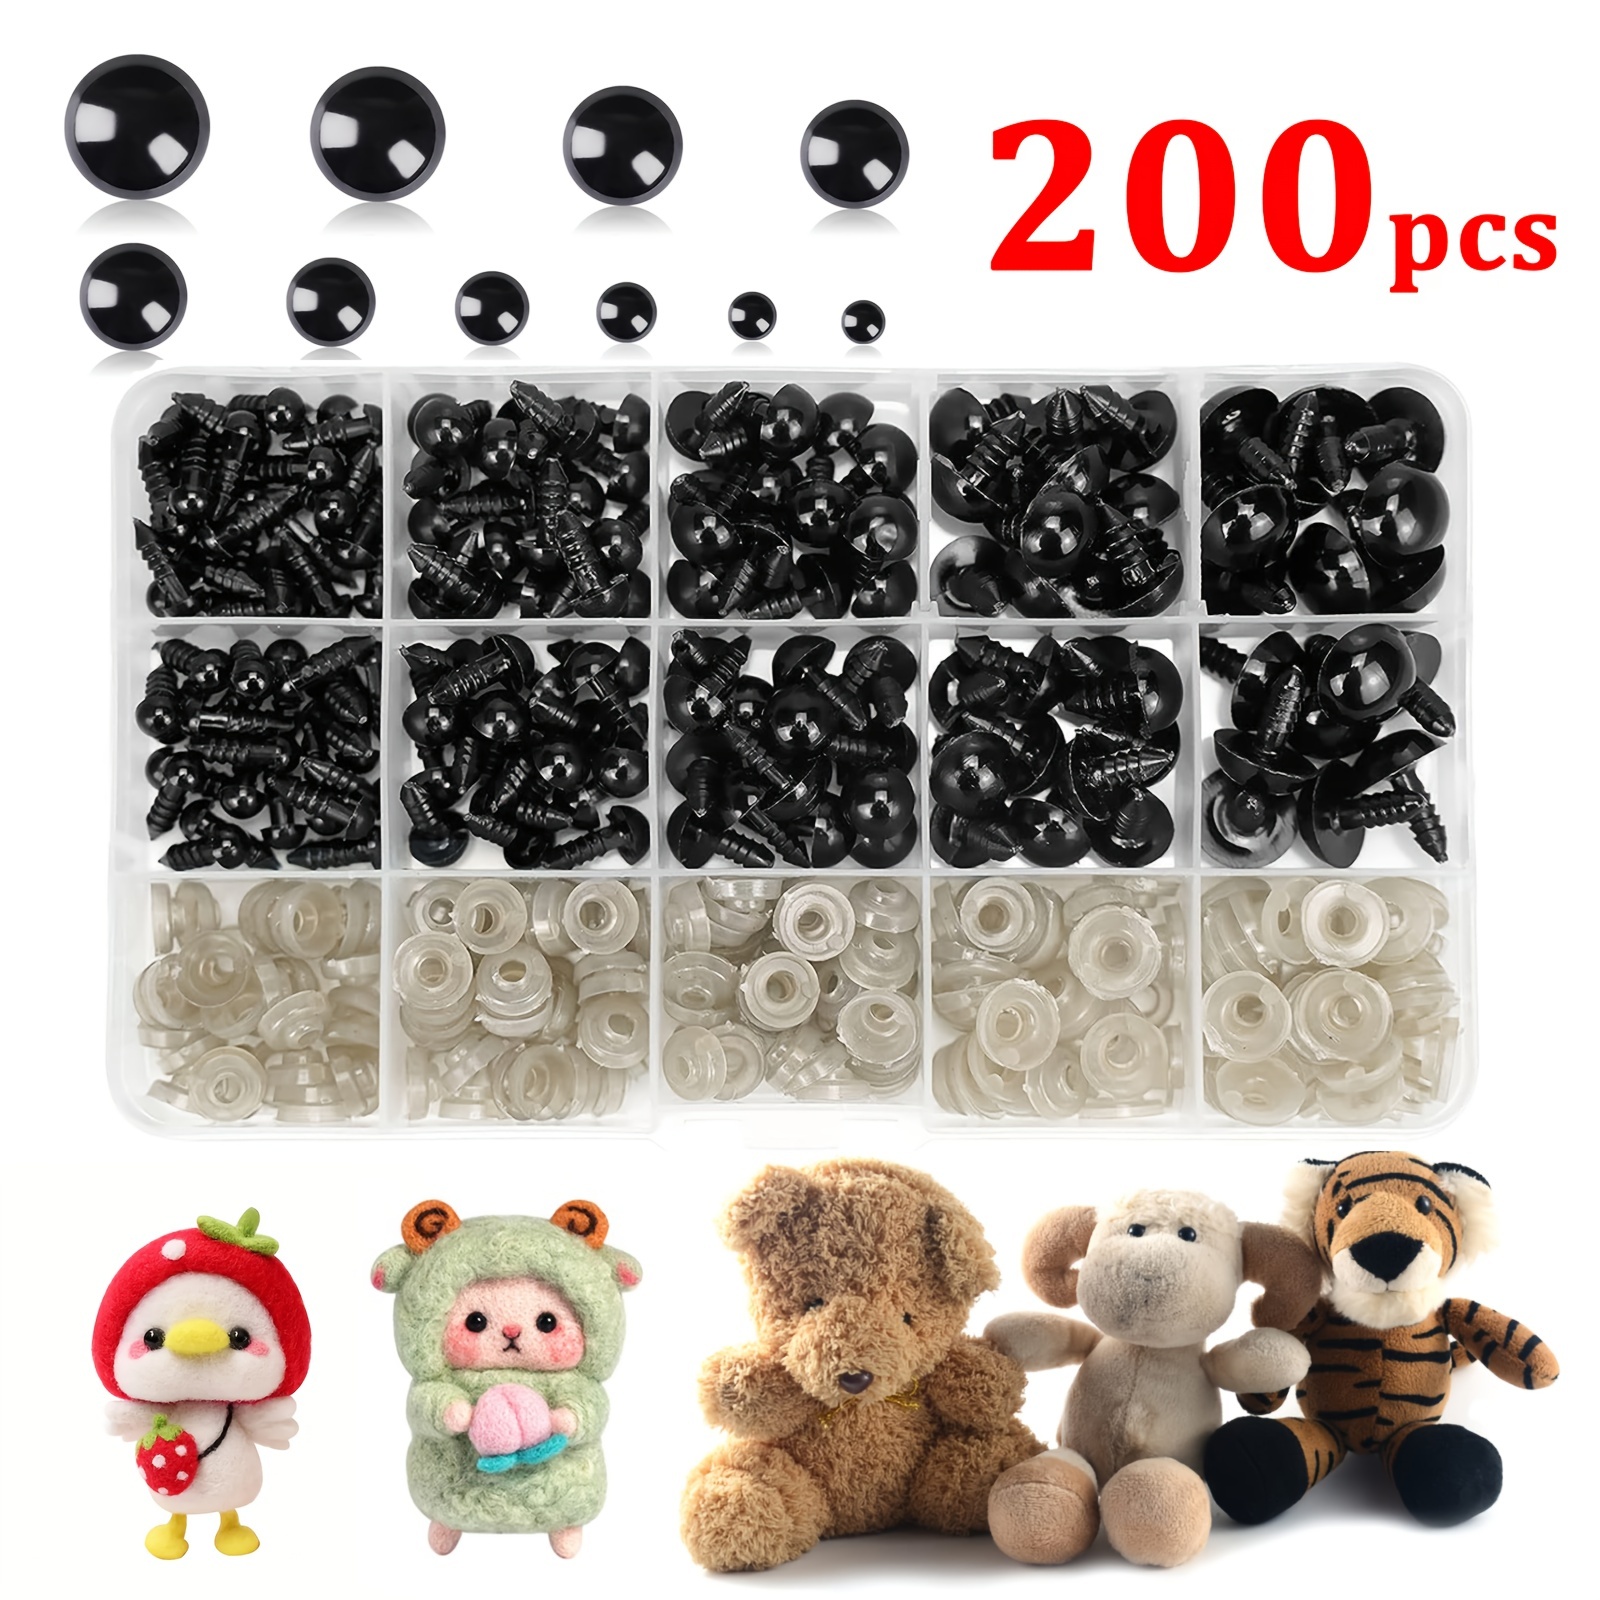 50Pcs Portable Bear Making Large Safety Eyes Doll Eyes for Crochet Craft